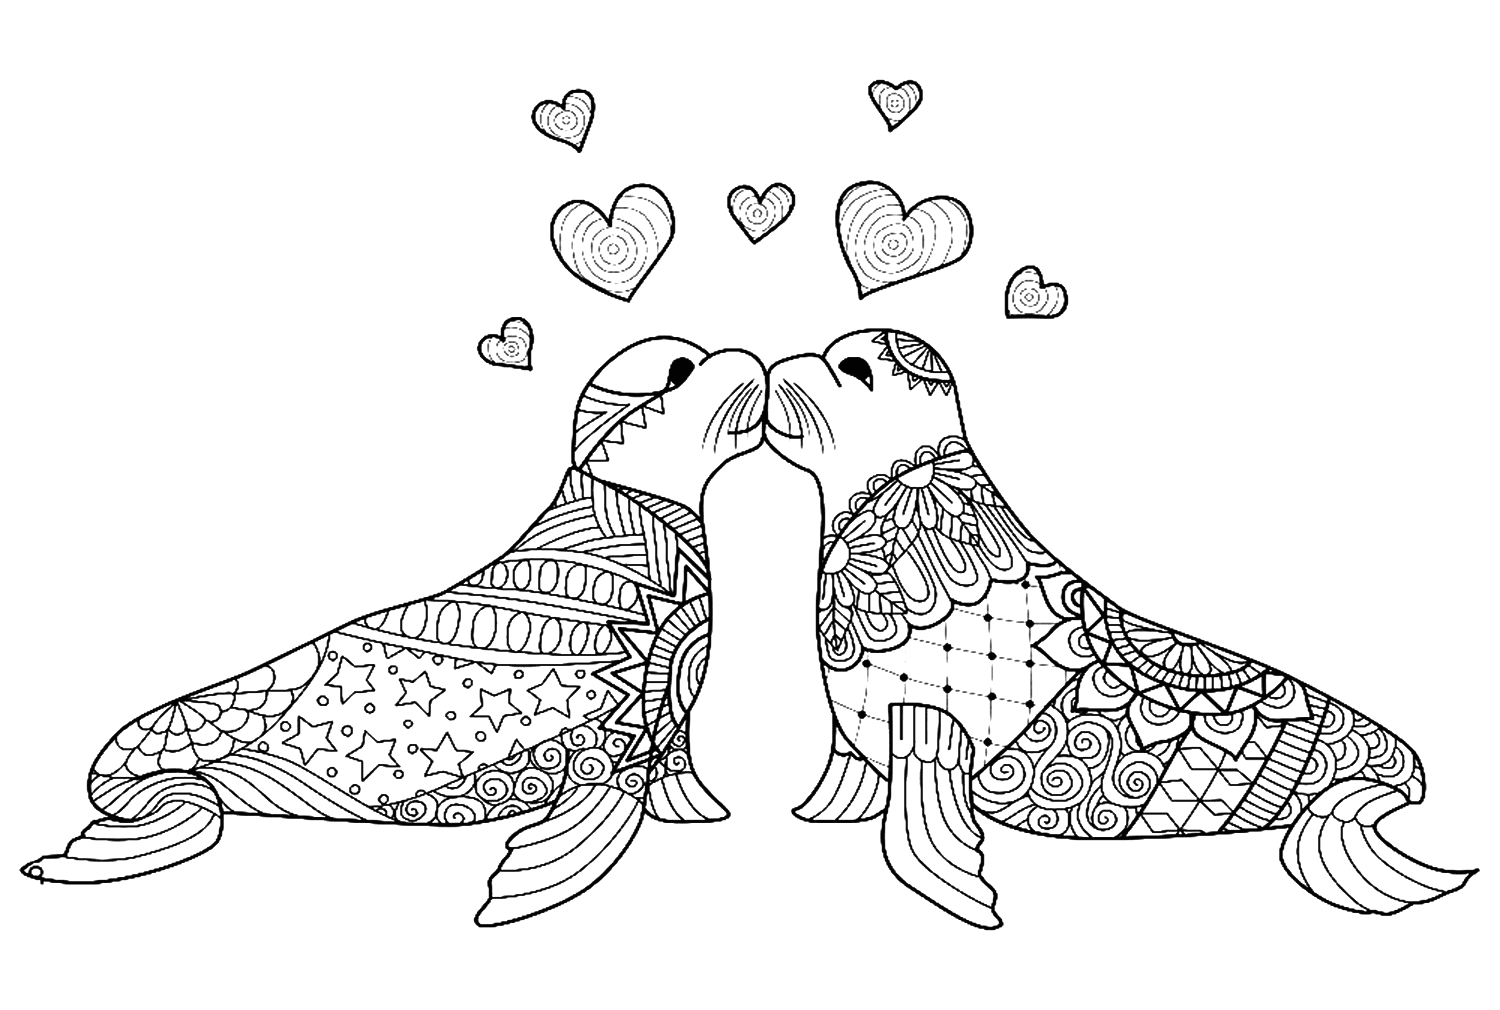 Zentangle Sea Lion Couple In Love from Zentangle Animal